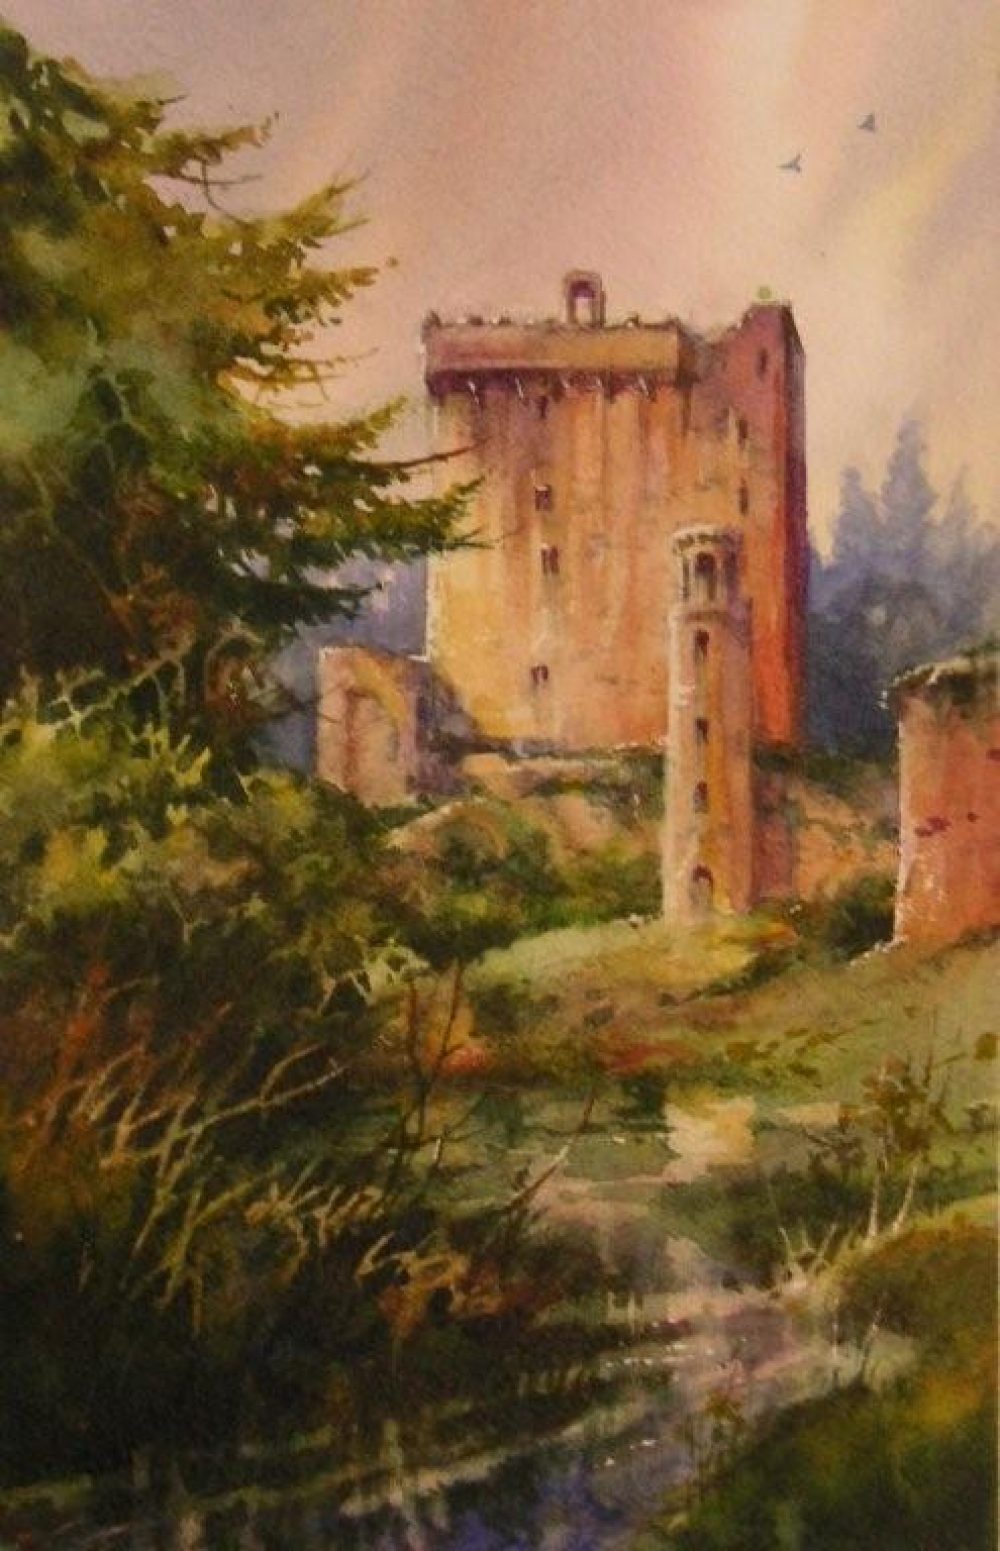 Blarney Castle in Ireland - Watercolor painting of the Blarney Castle in Ireland